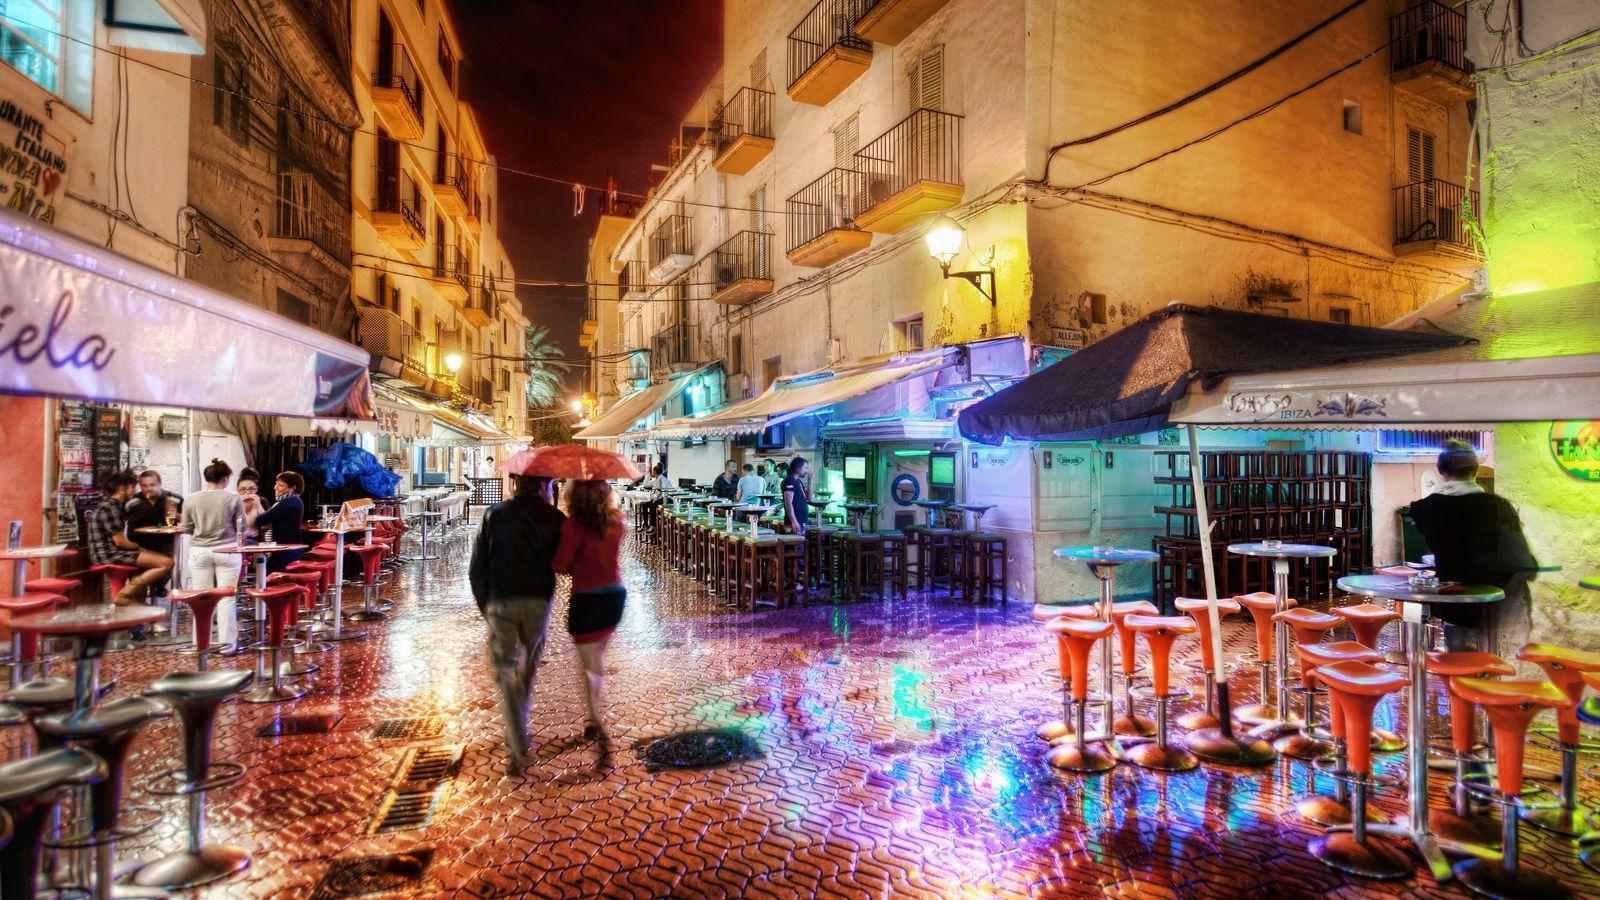 A Rainy and Romantic Night in Ibiza widescreen wallpaper. Wide